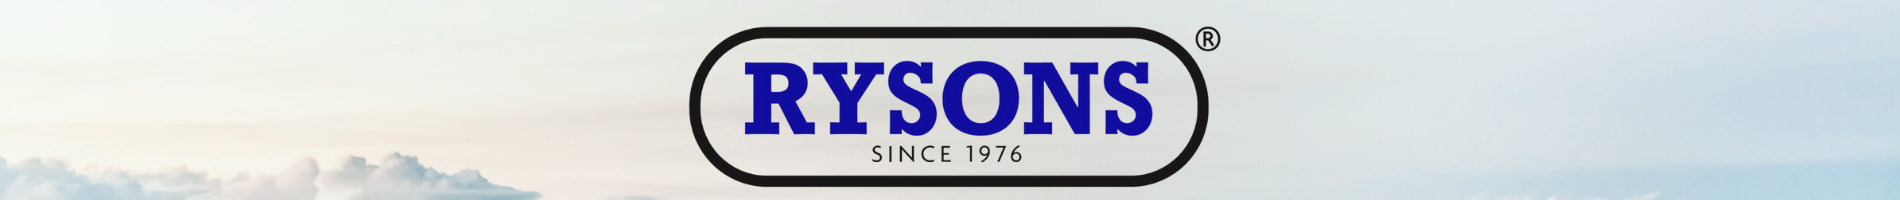 Rysons brand